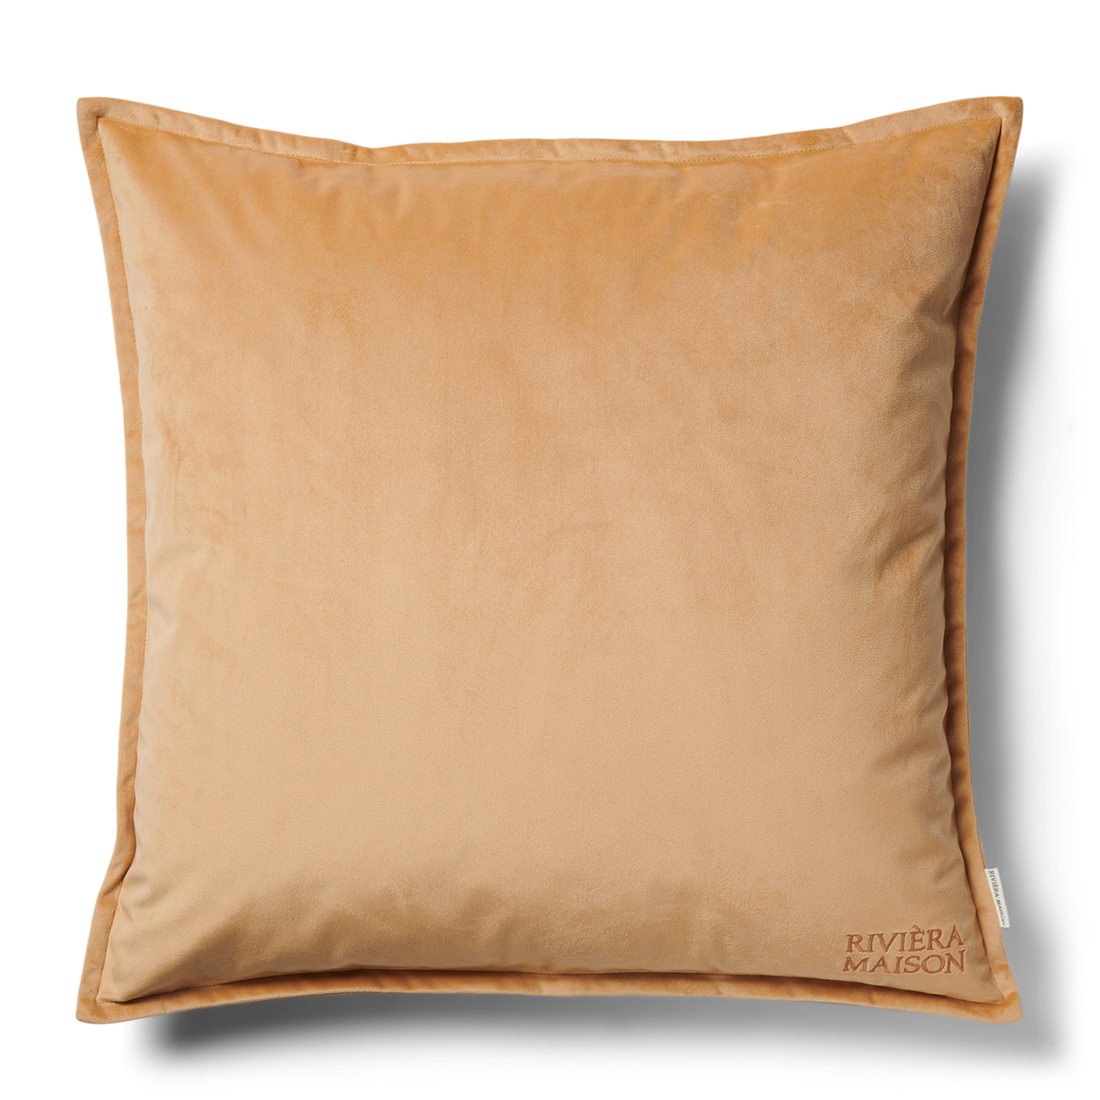 Riviera Maison Kussenhoes 60x60 - RM Velvet Pillow Cover - Oranje - 60x60 cm